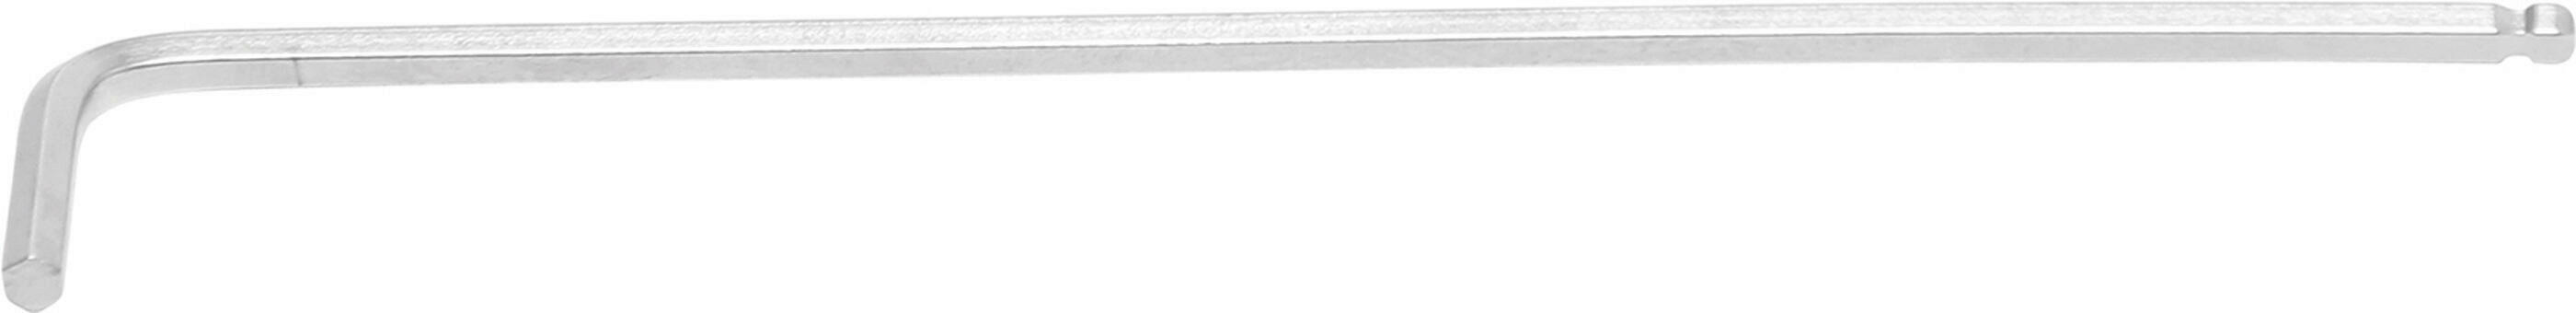 Winkelschlüssel | extra lang | Innensechskant / Innensechskant mit Kugelkopf 3 mm